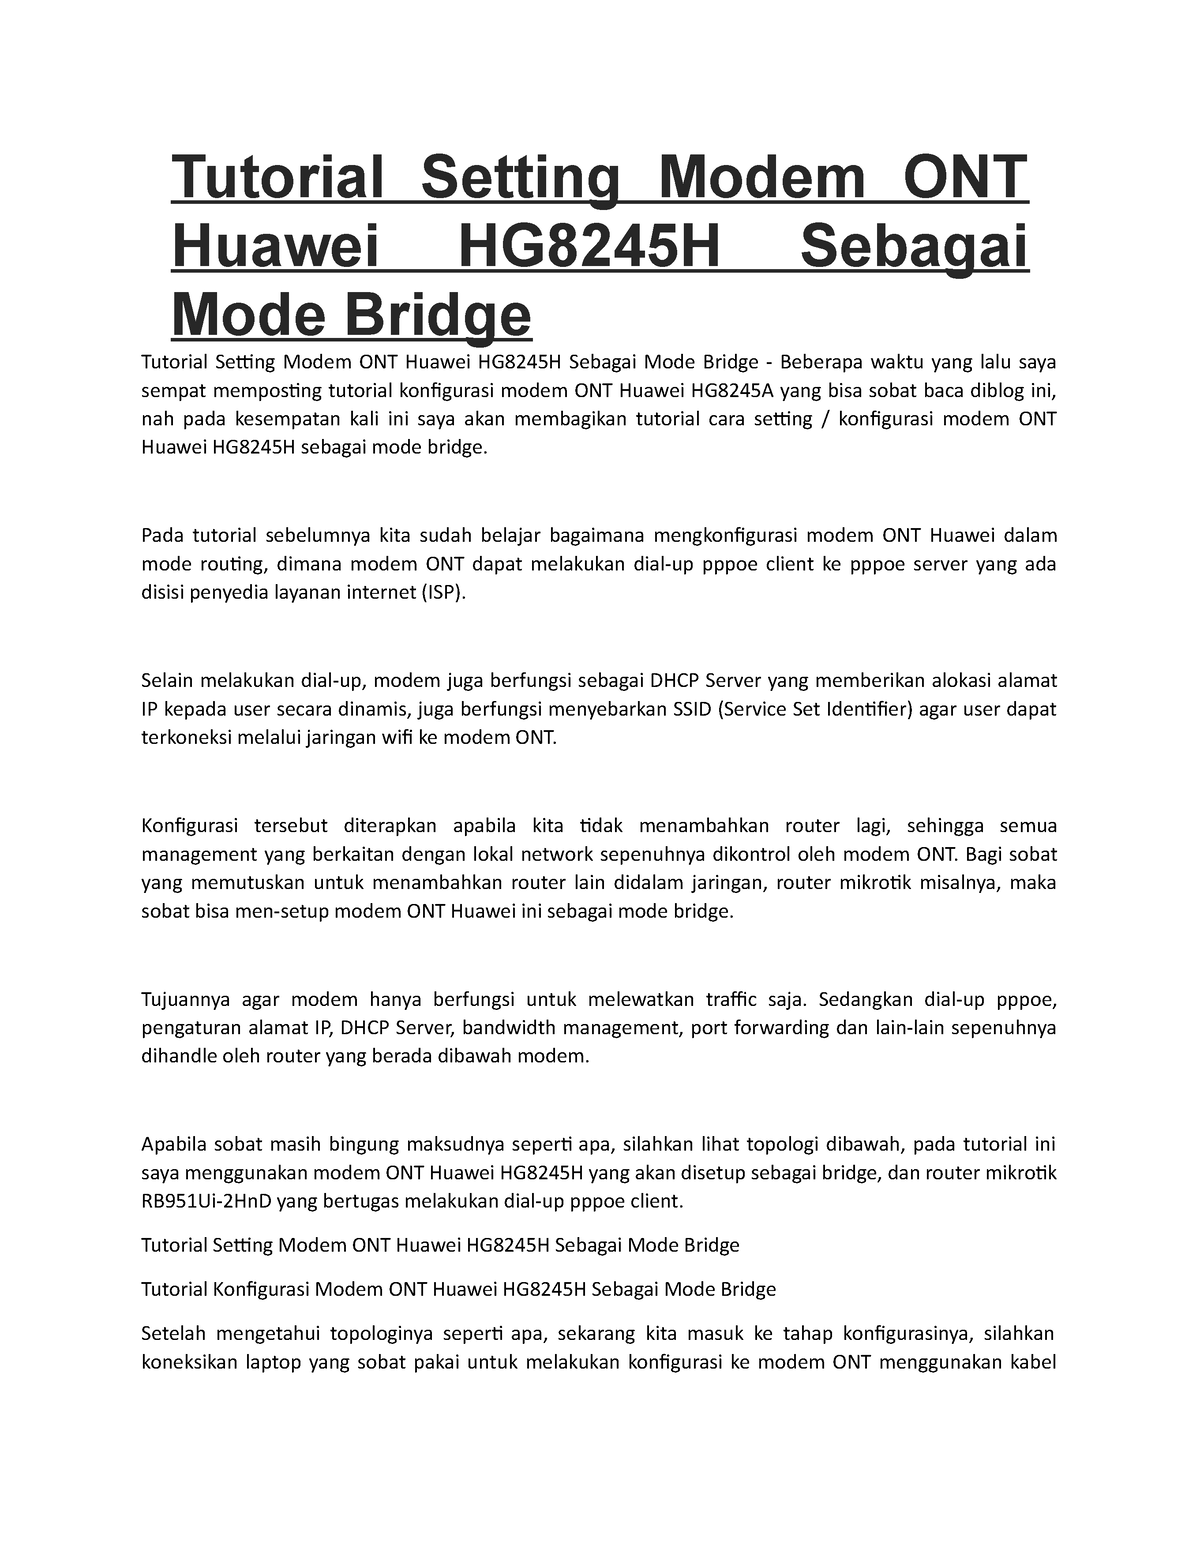 Tutorial Setting Modem Ont Huawei Hg8245h Sebagai Mod 7564